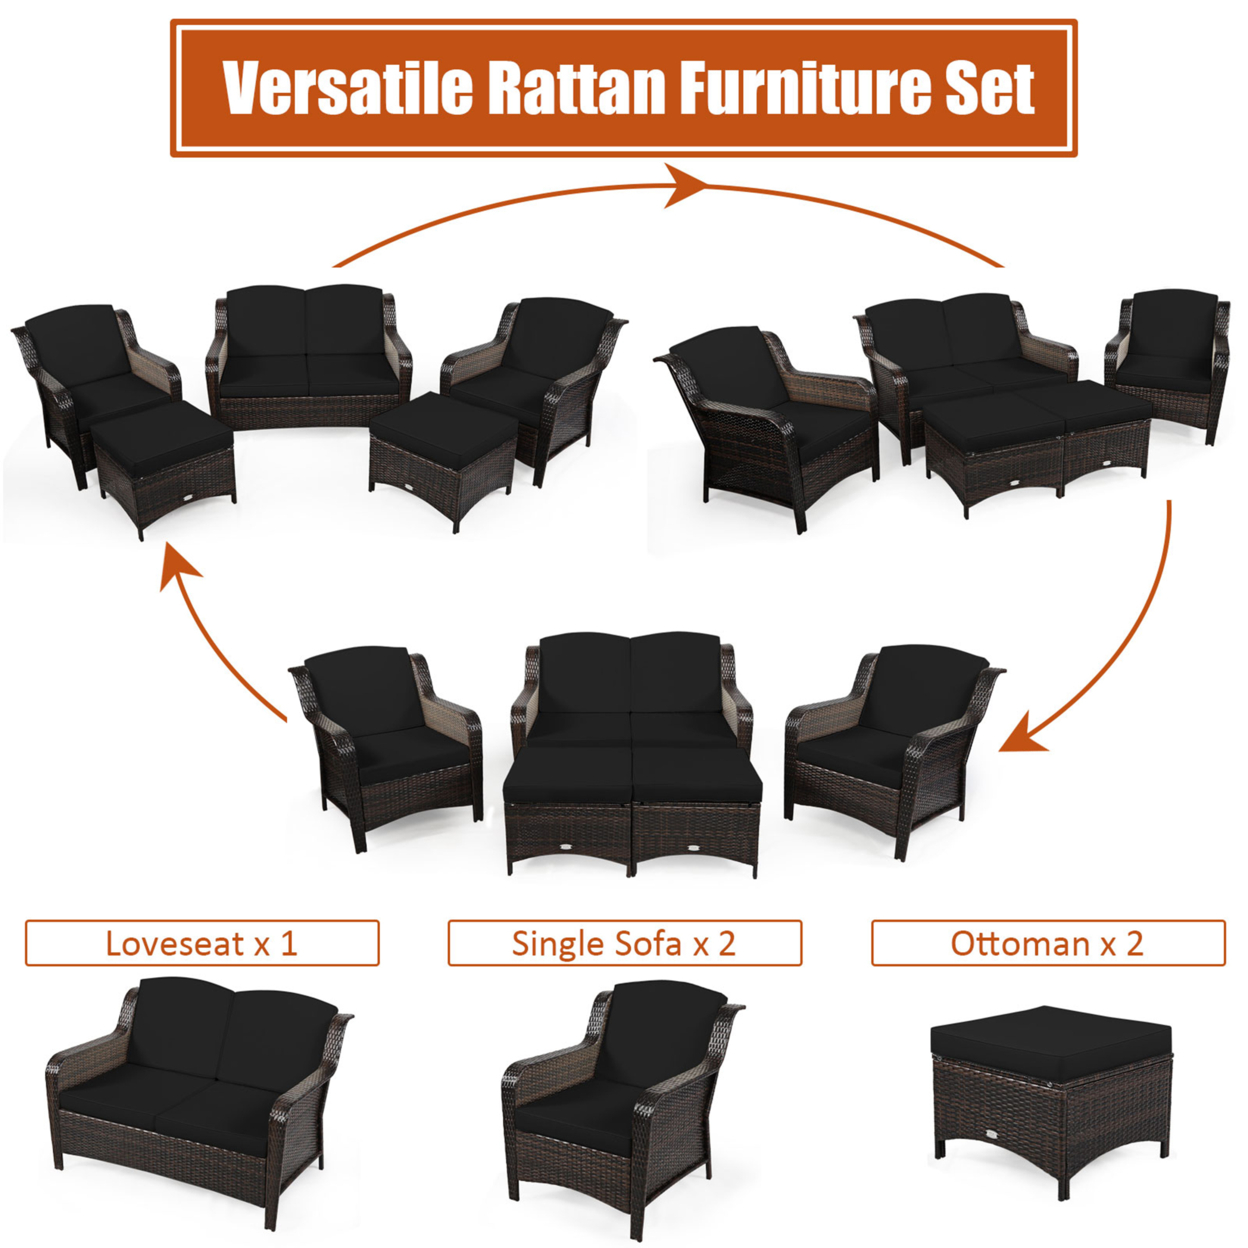 5PCS Rattan Patio Conversation Sofa Furniture Set Outdoor W/ Black Cushions